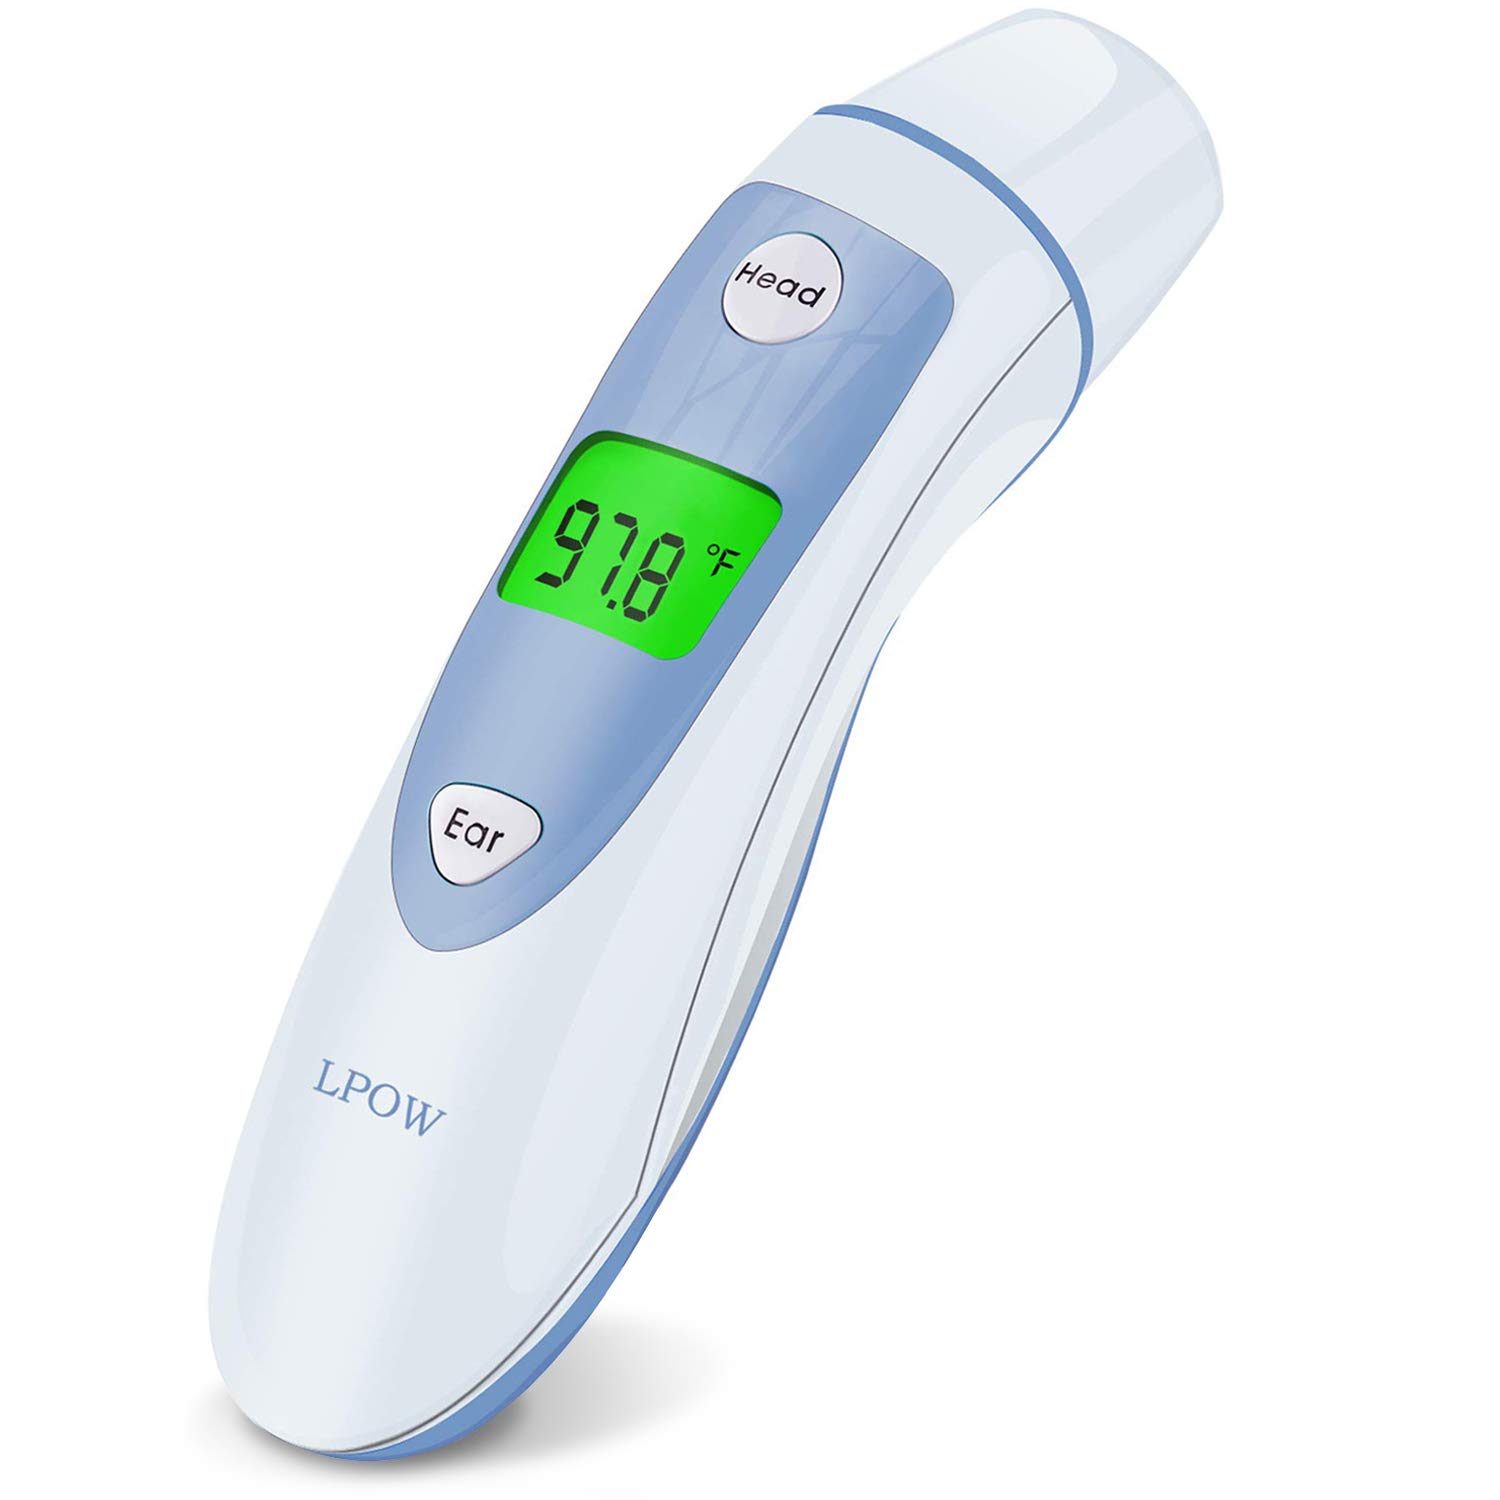 LPOW Baby Thermometer